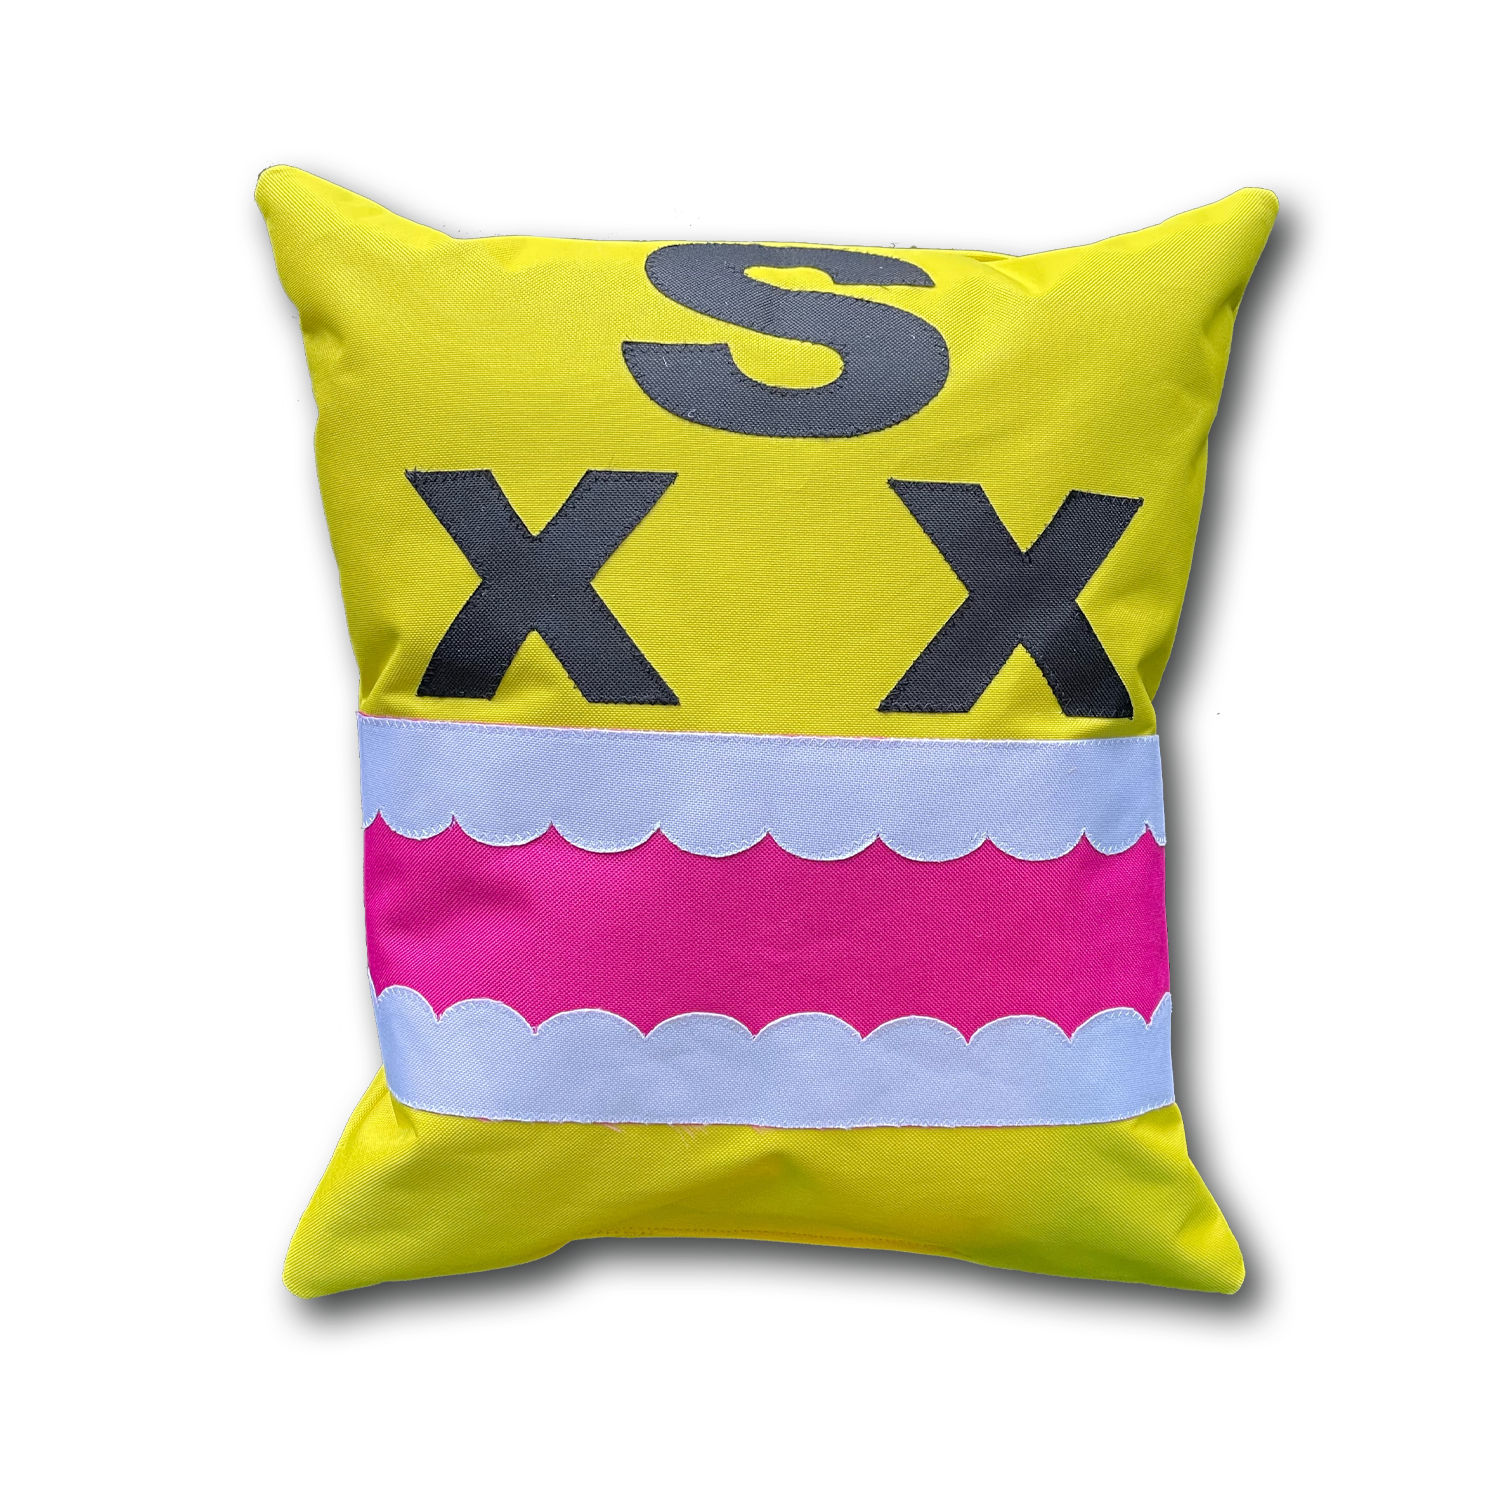 Yellow Chomper Pillow